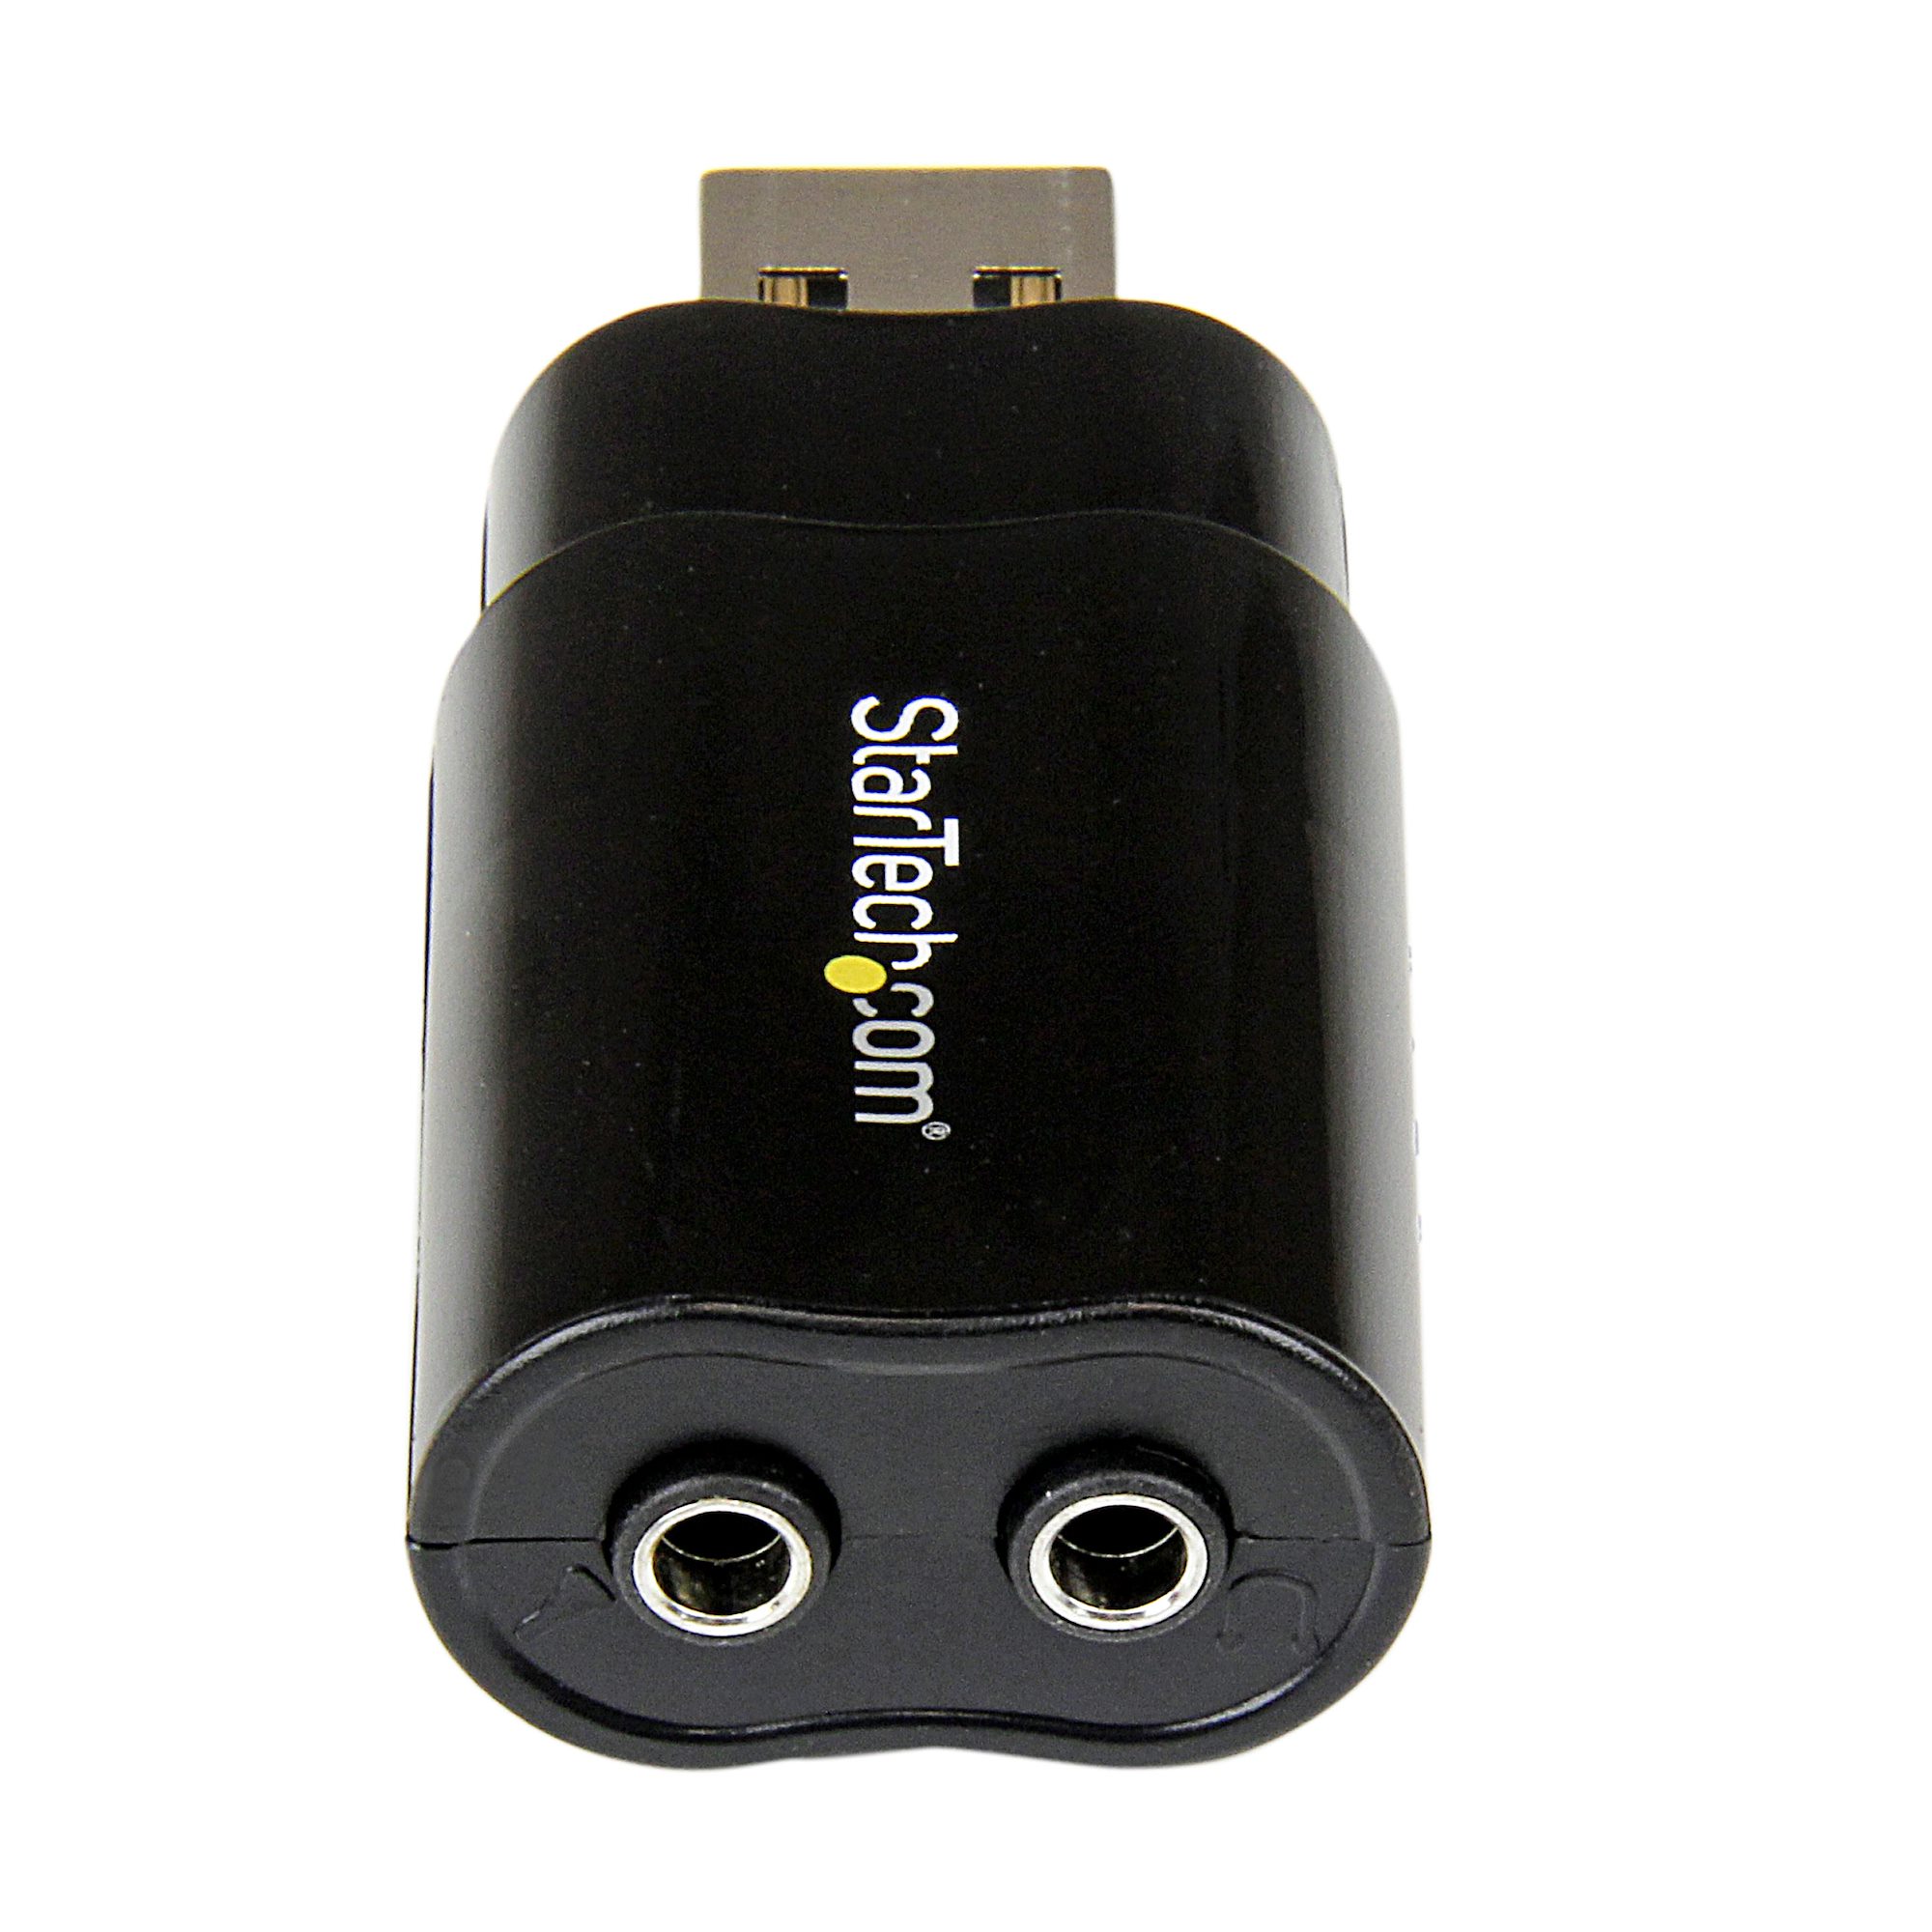 Acquista Scheda audio esterna USB 2.0 GS3 Adattatore per scheda